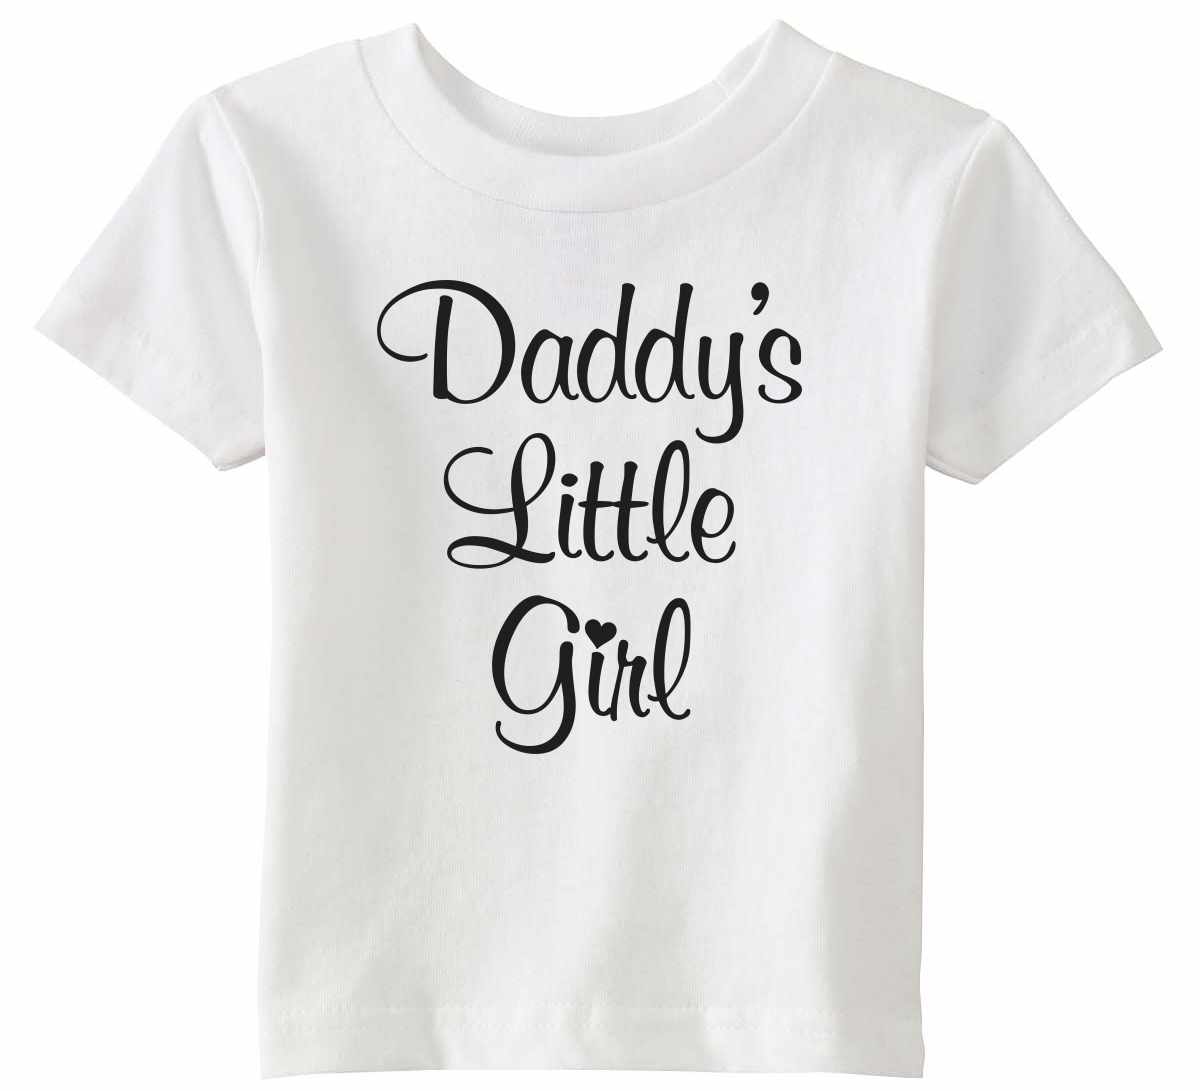 Daddy's Little Girl on Infant-Toddler T-Shirt